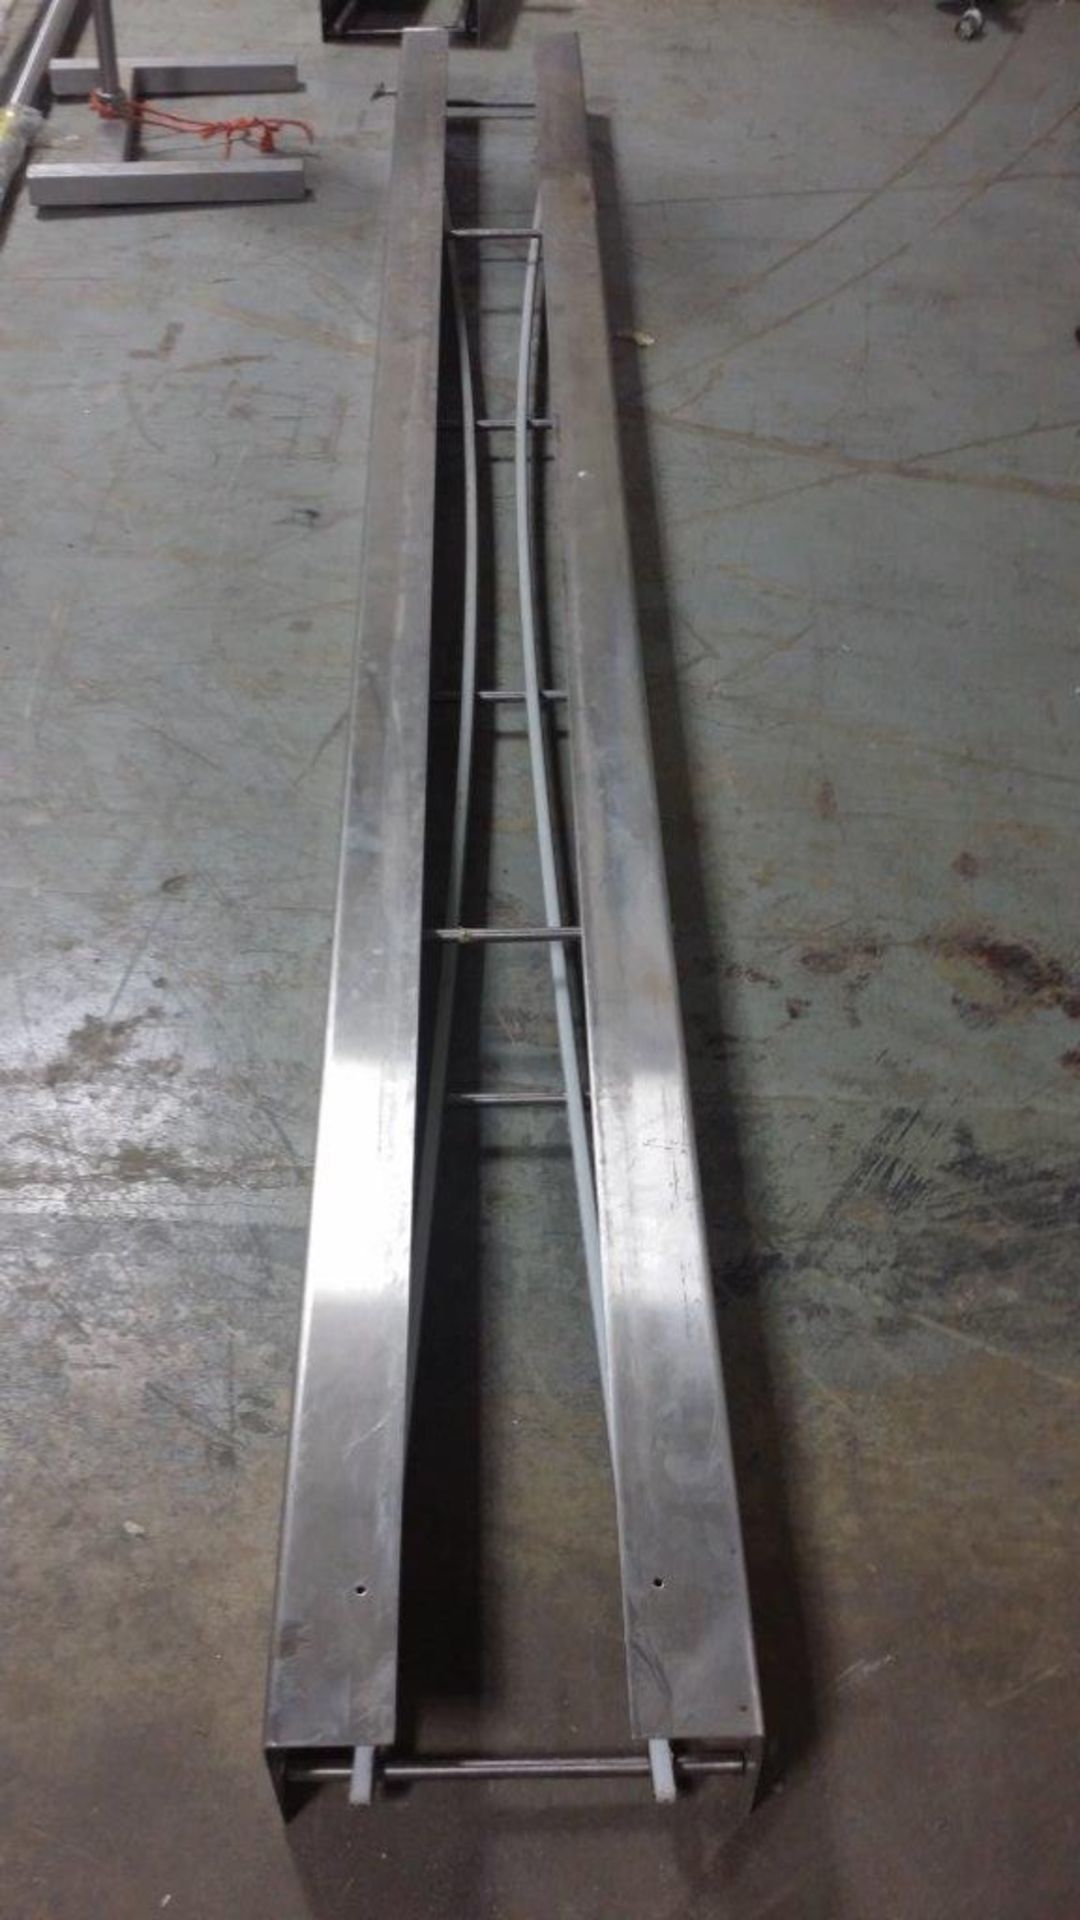 Keenline Conveyor Systems, Stainless Steel Bottling Line Tracks Frames (2) long (2) short, - Image 4 of 12